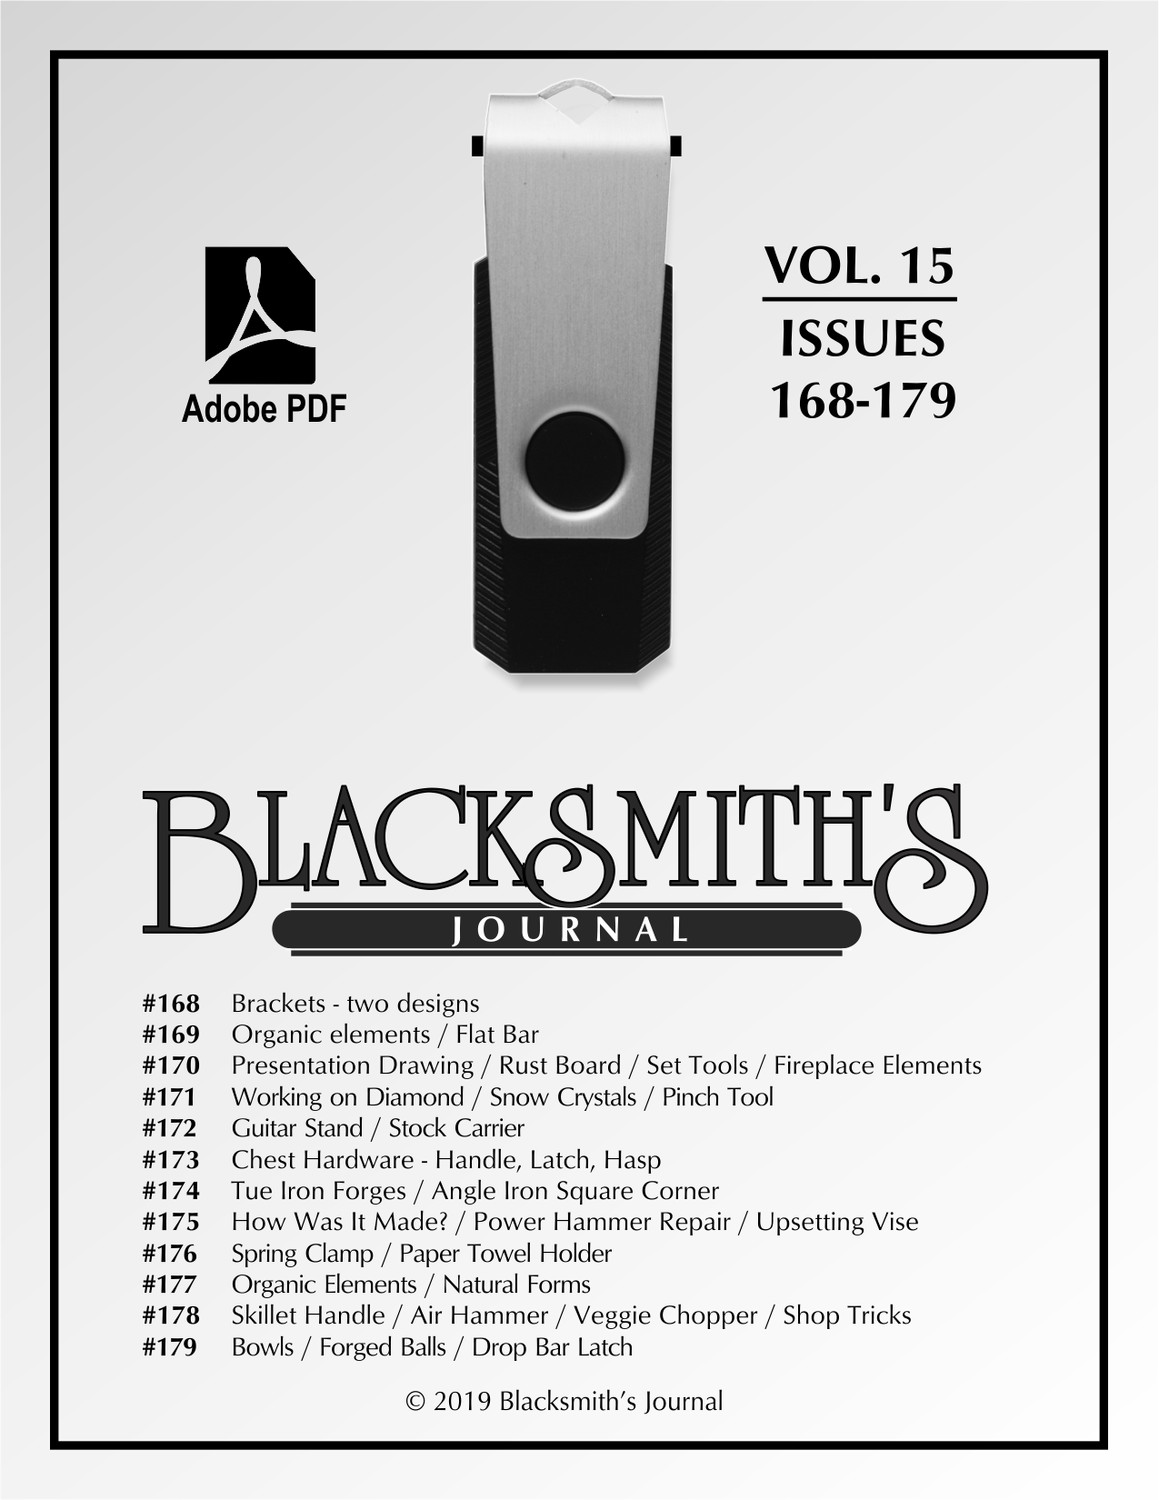 USB Flash Drive - Blacksmith's Journal Vol. 15